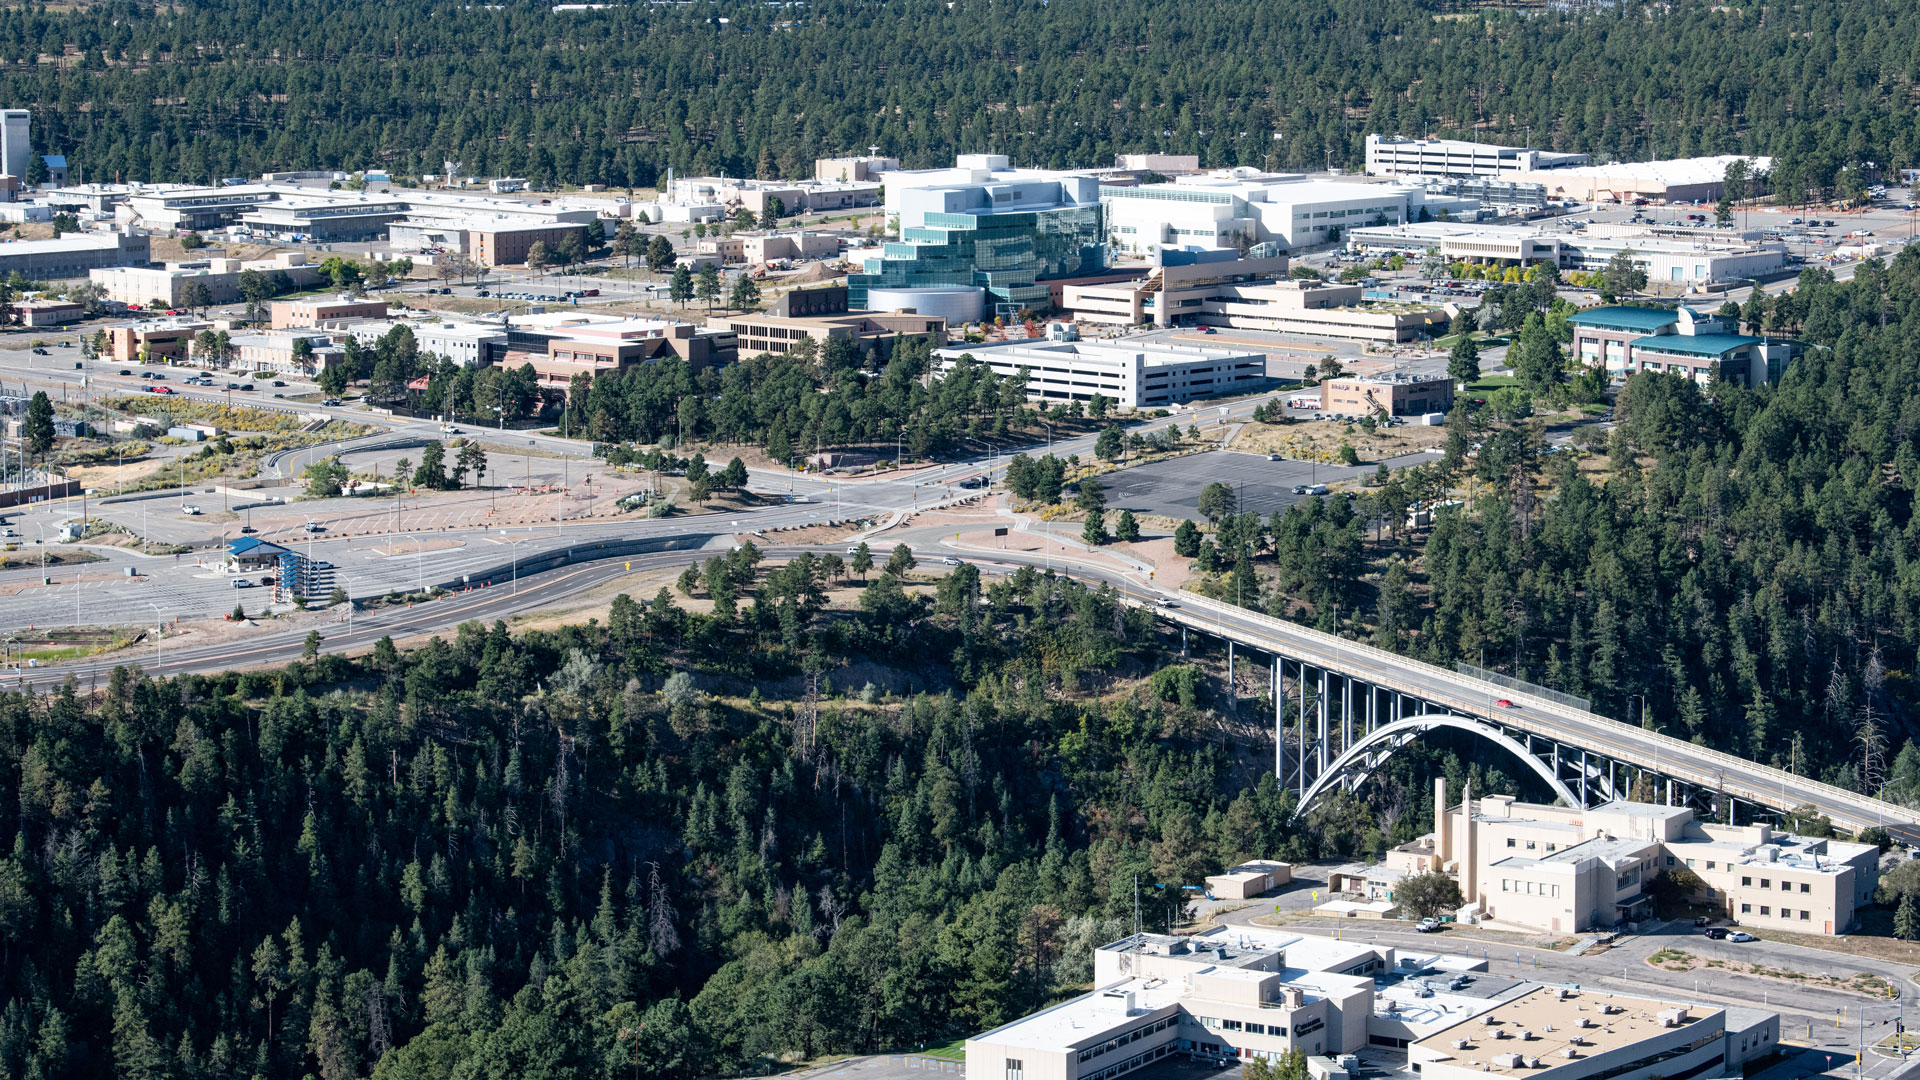 aerial view of Los Alamos National Laboratory